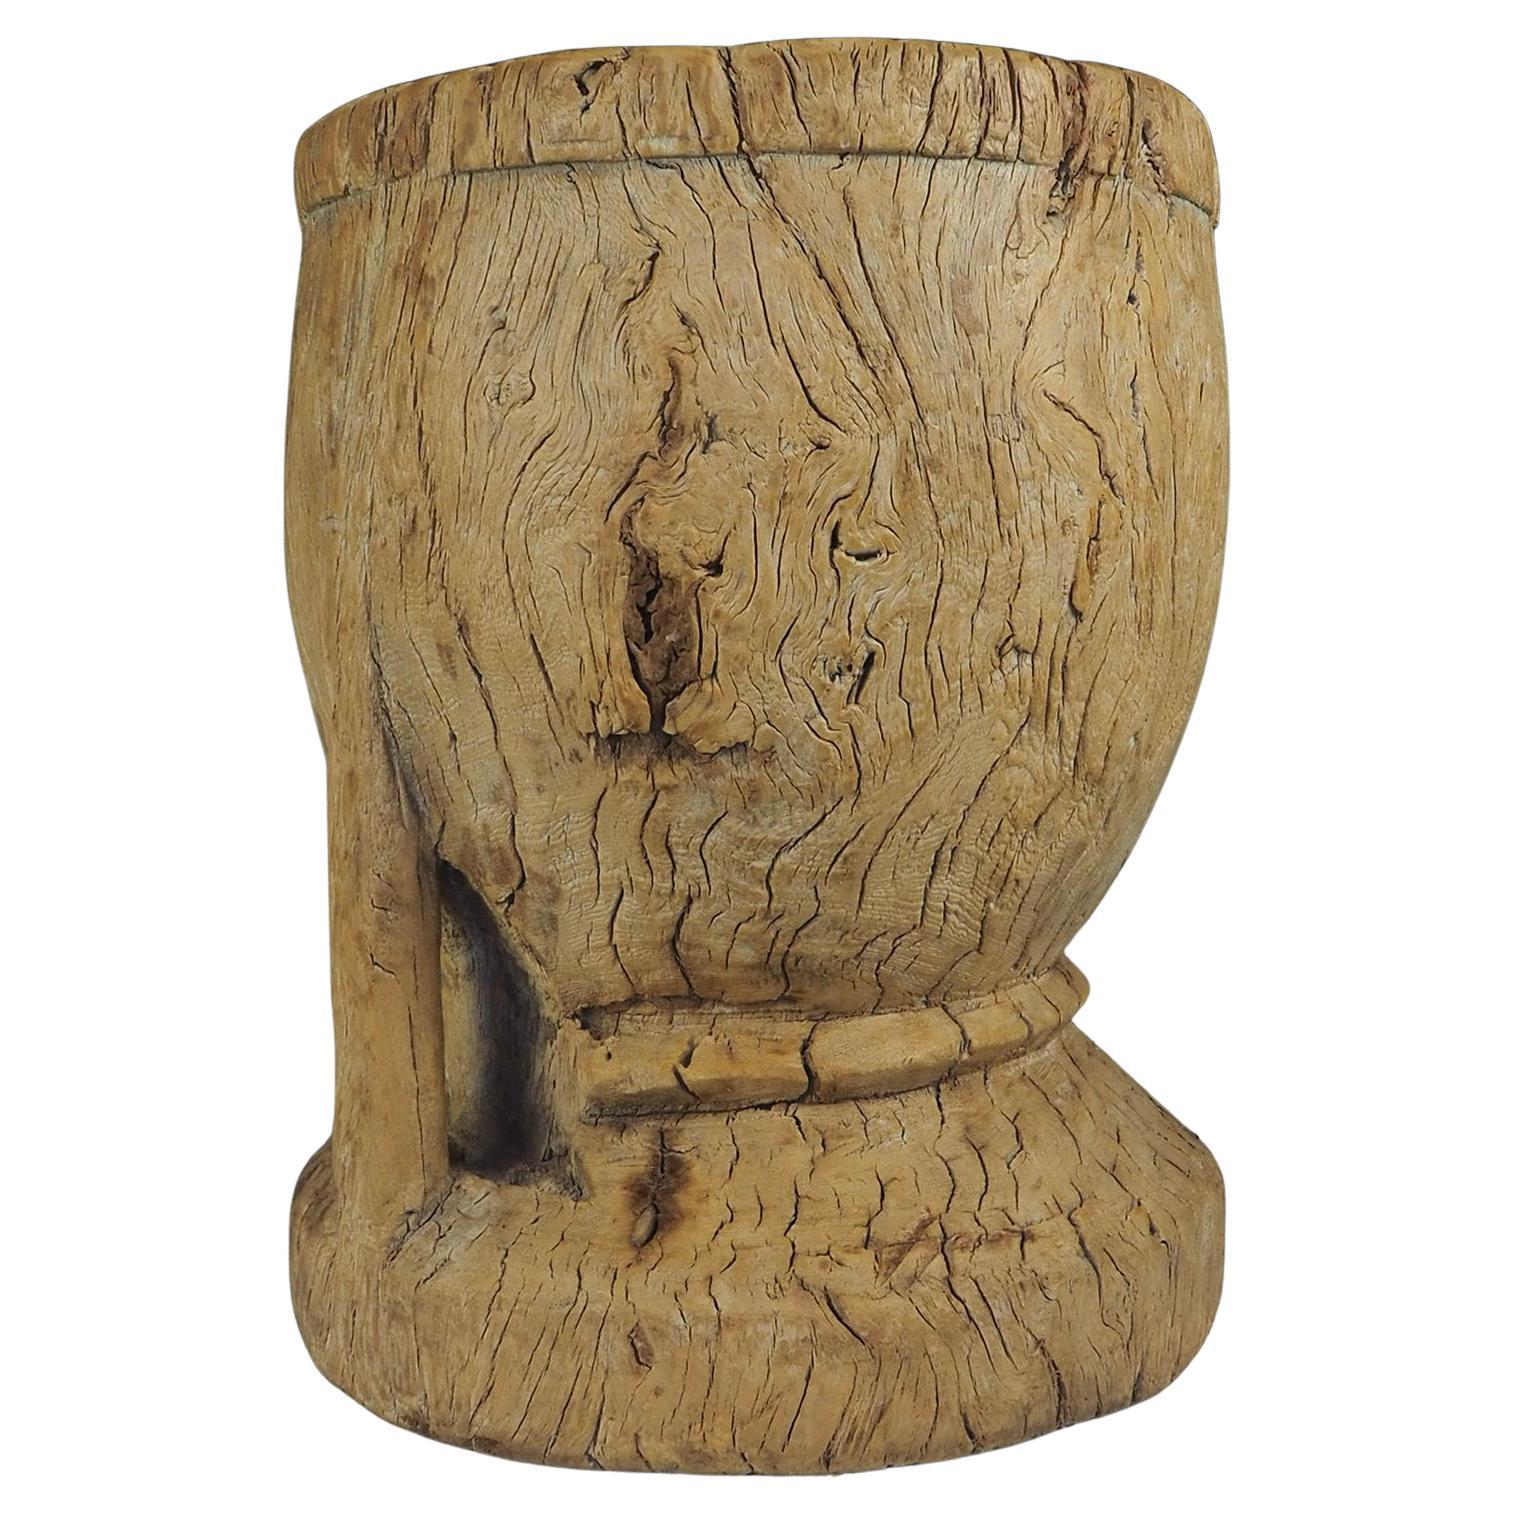 Rustic Elm Wooden Large Mortar/Grain Bowl Hand Carved